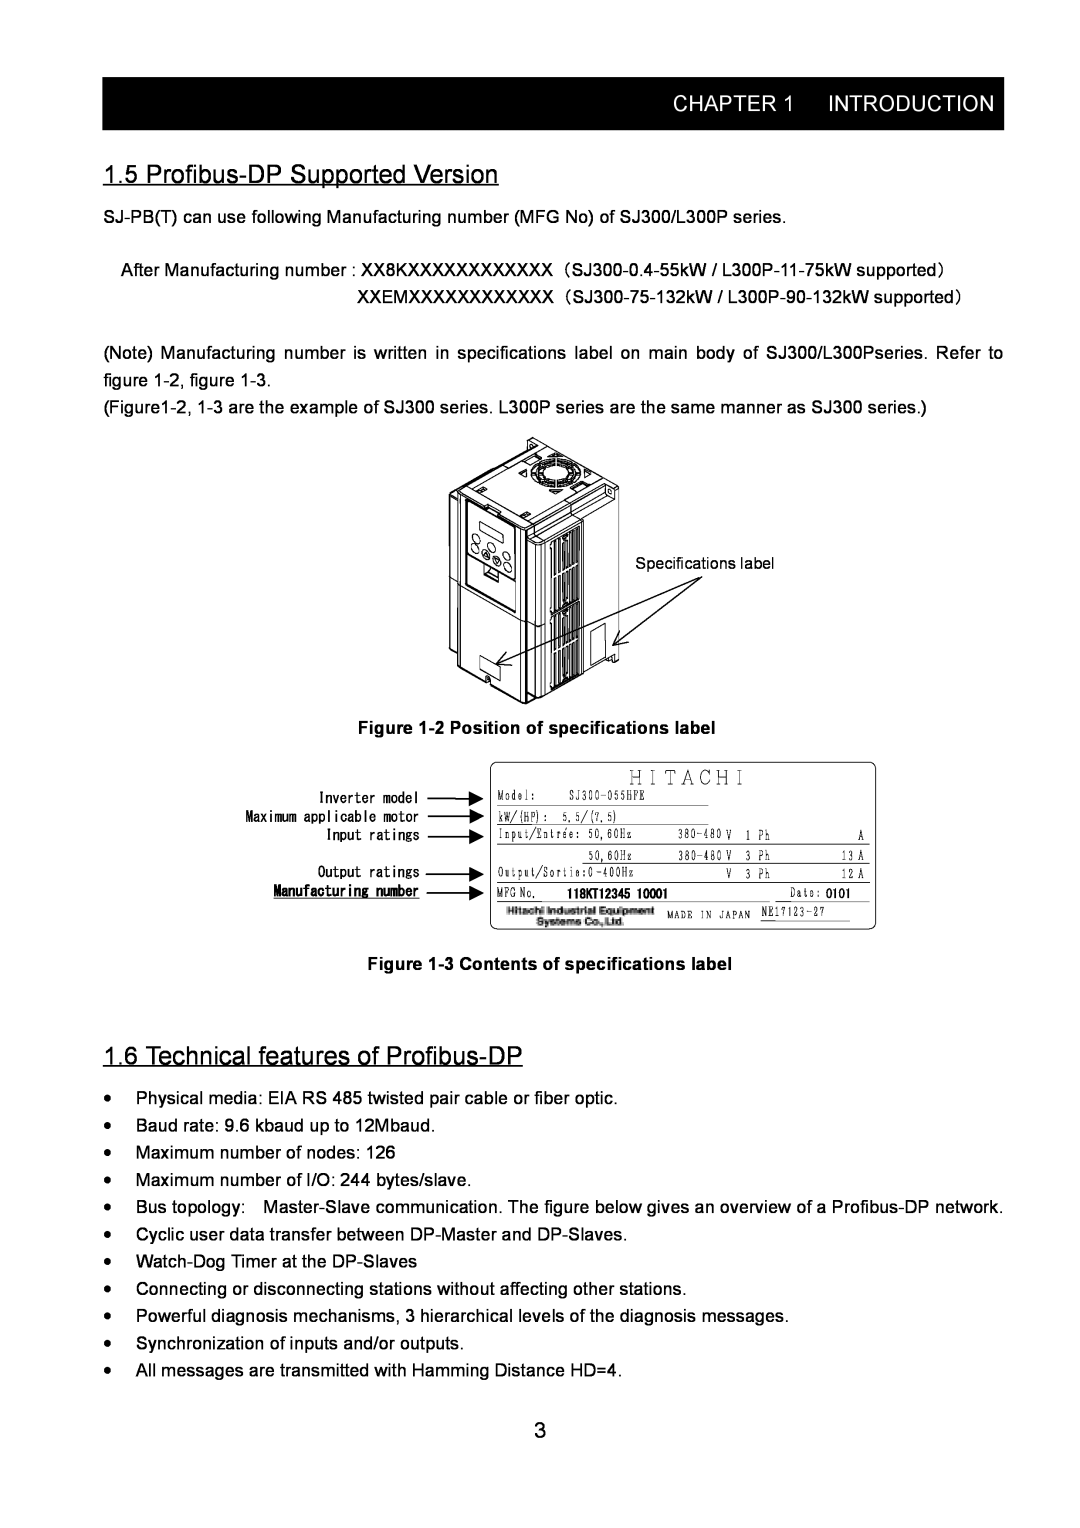 Hitachi SJ-PB(T) instruction manual Profibus-DPSupported Version, Technical features of Profibus-DP, Introduction 